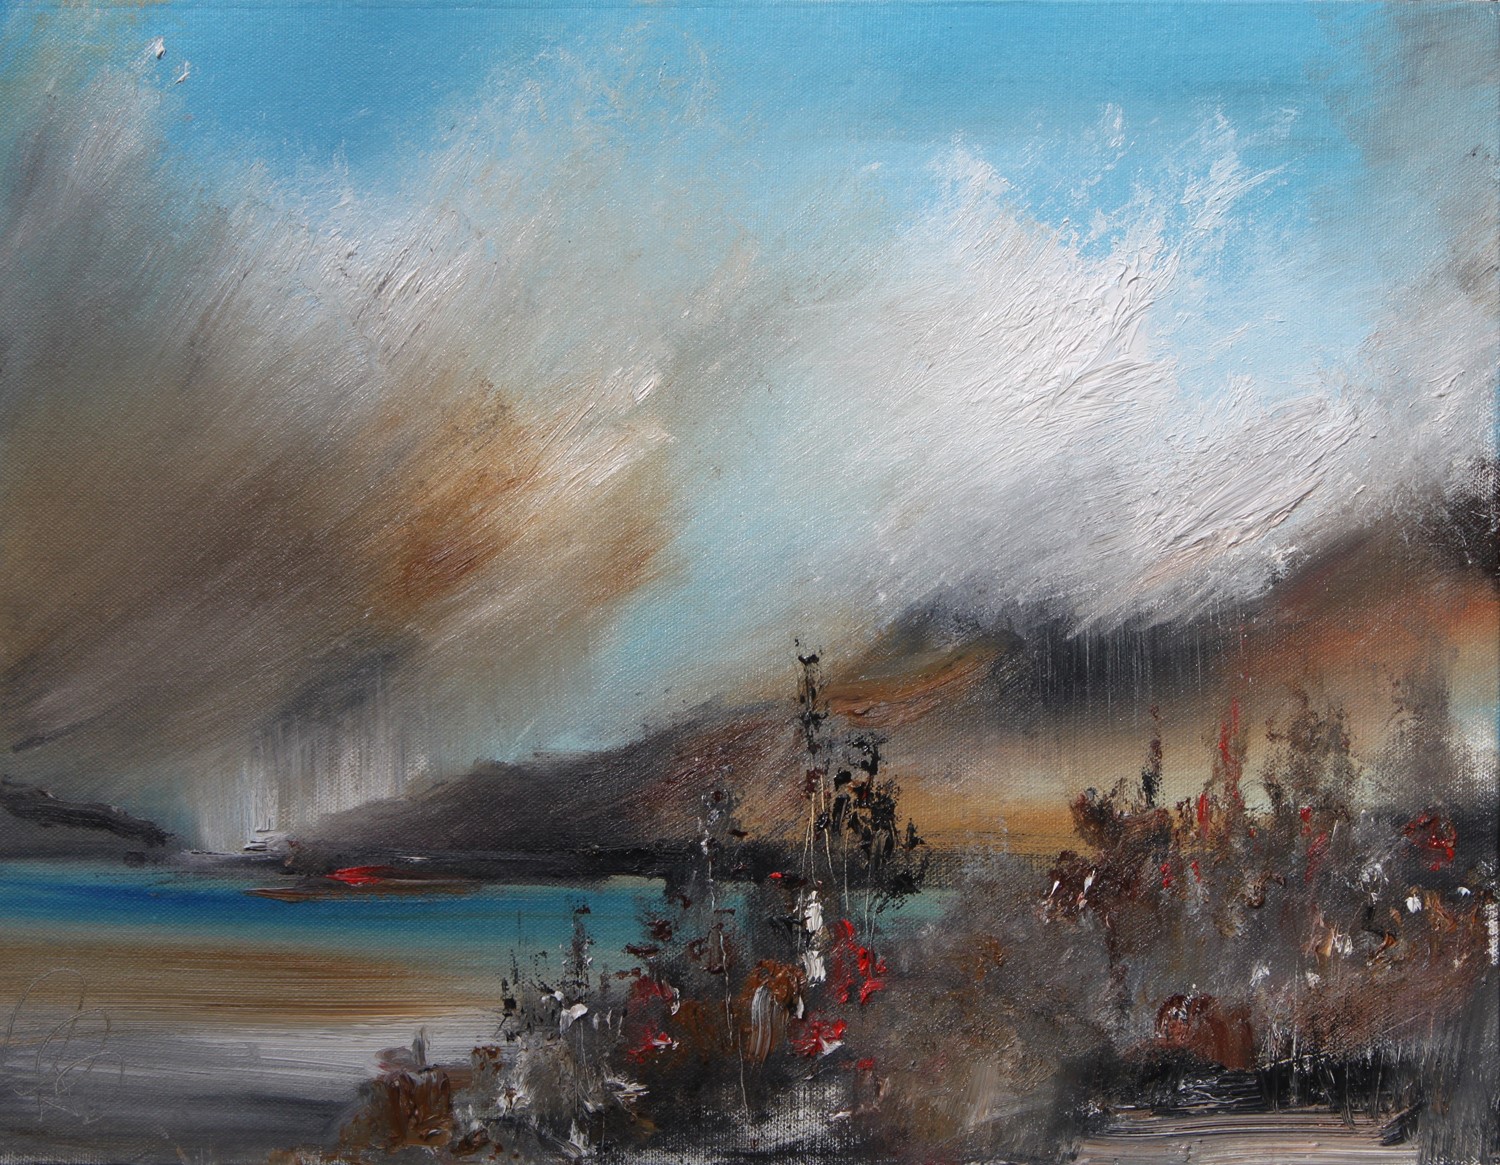 'Loch Shores' by artist Rosanne Barr